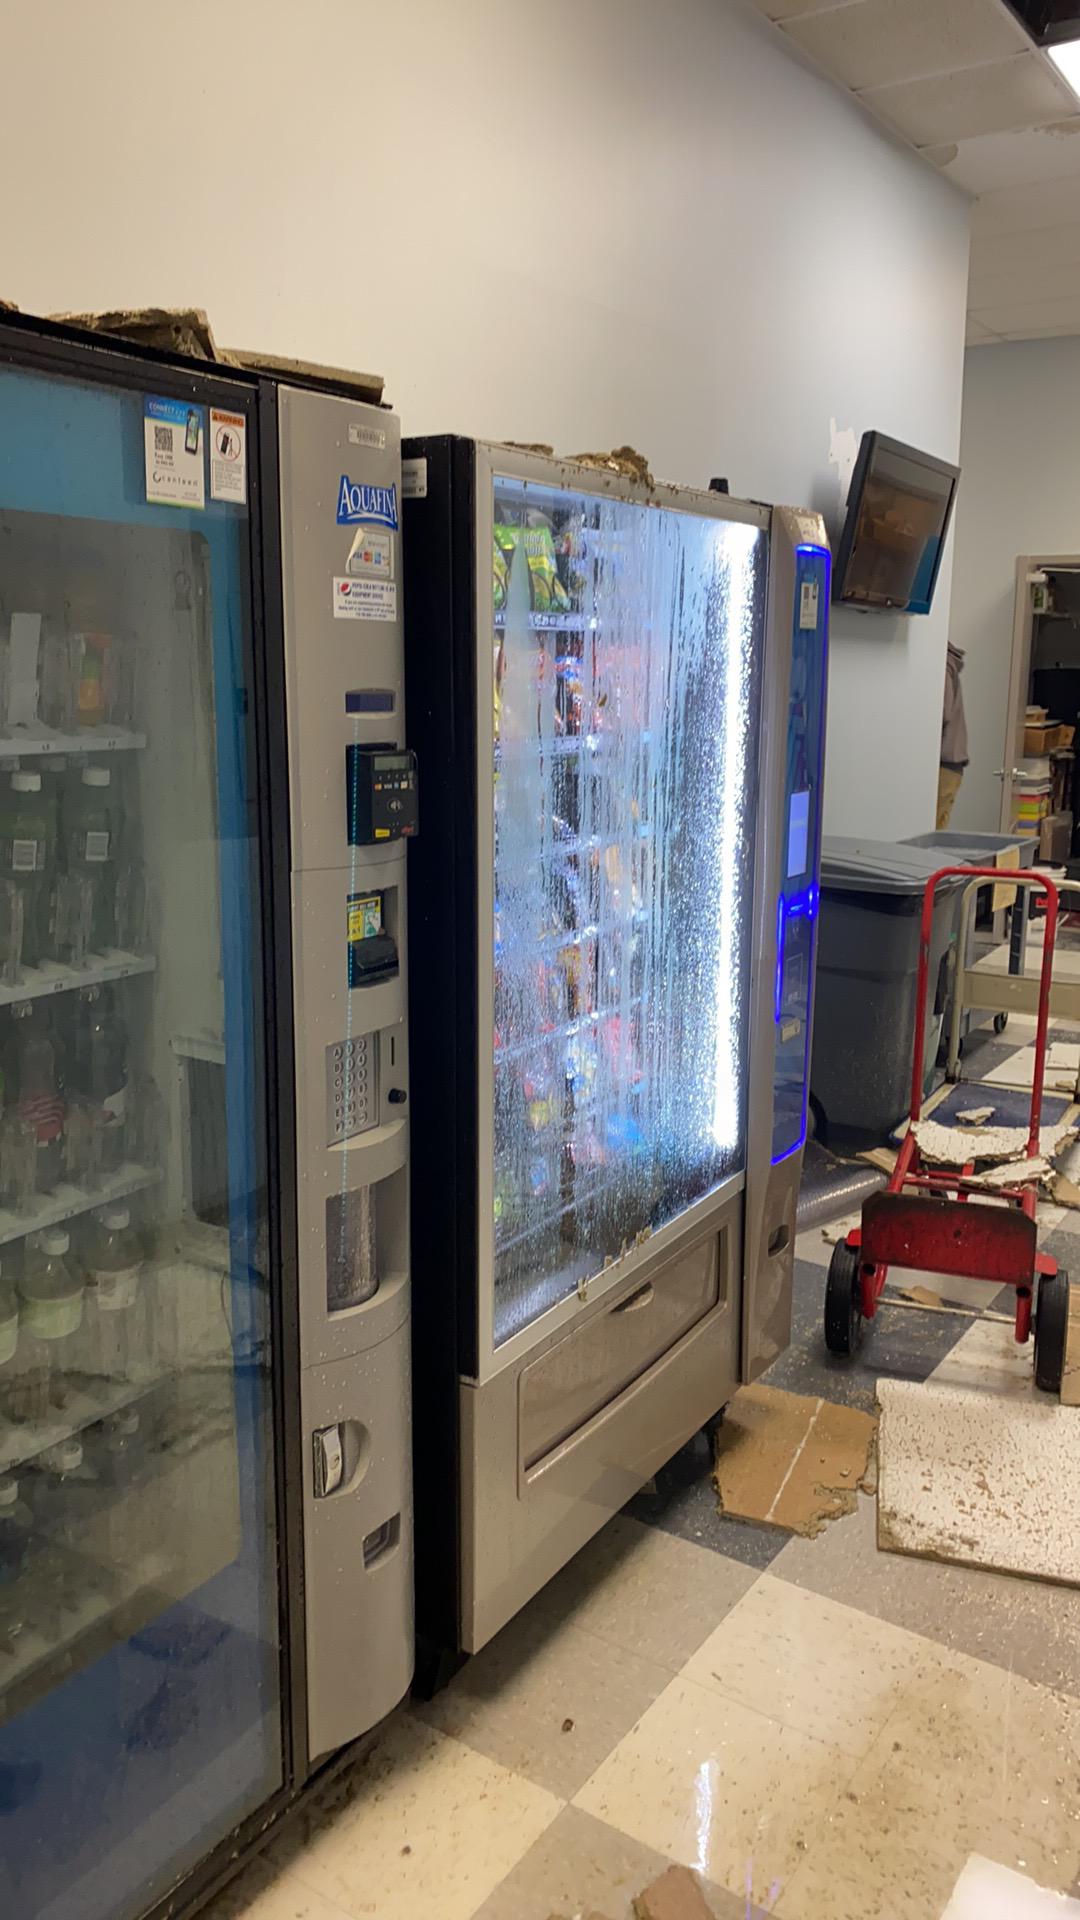 Soaked vending machine